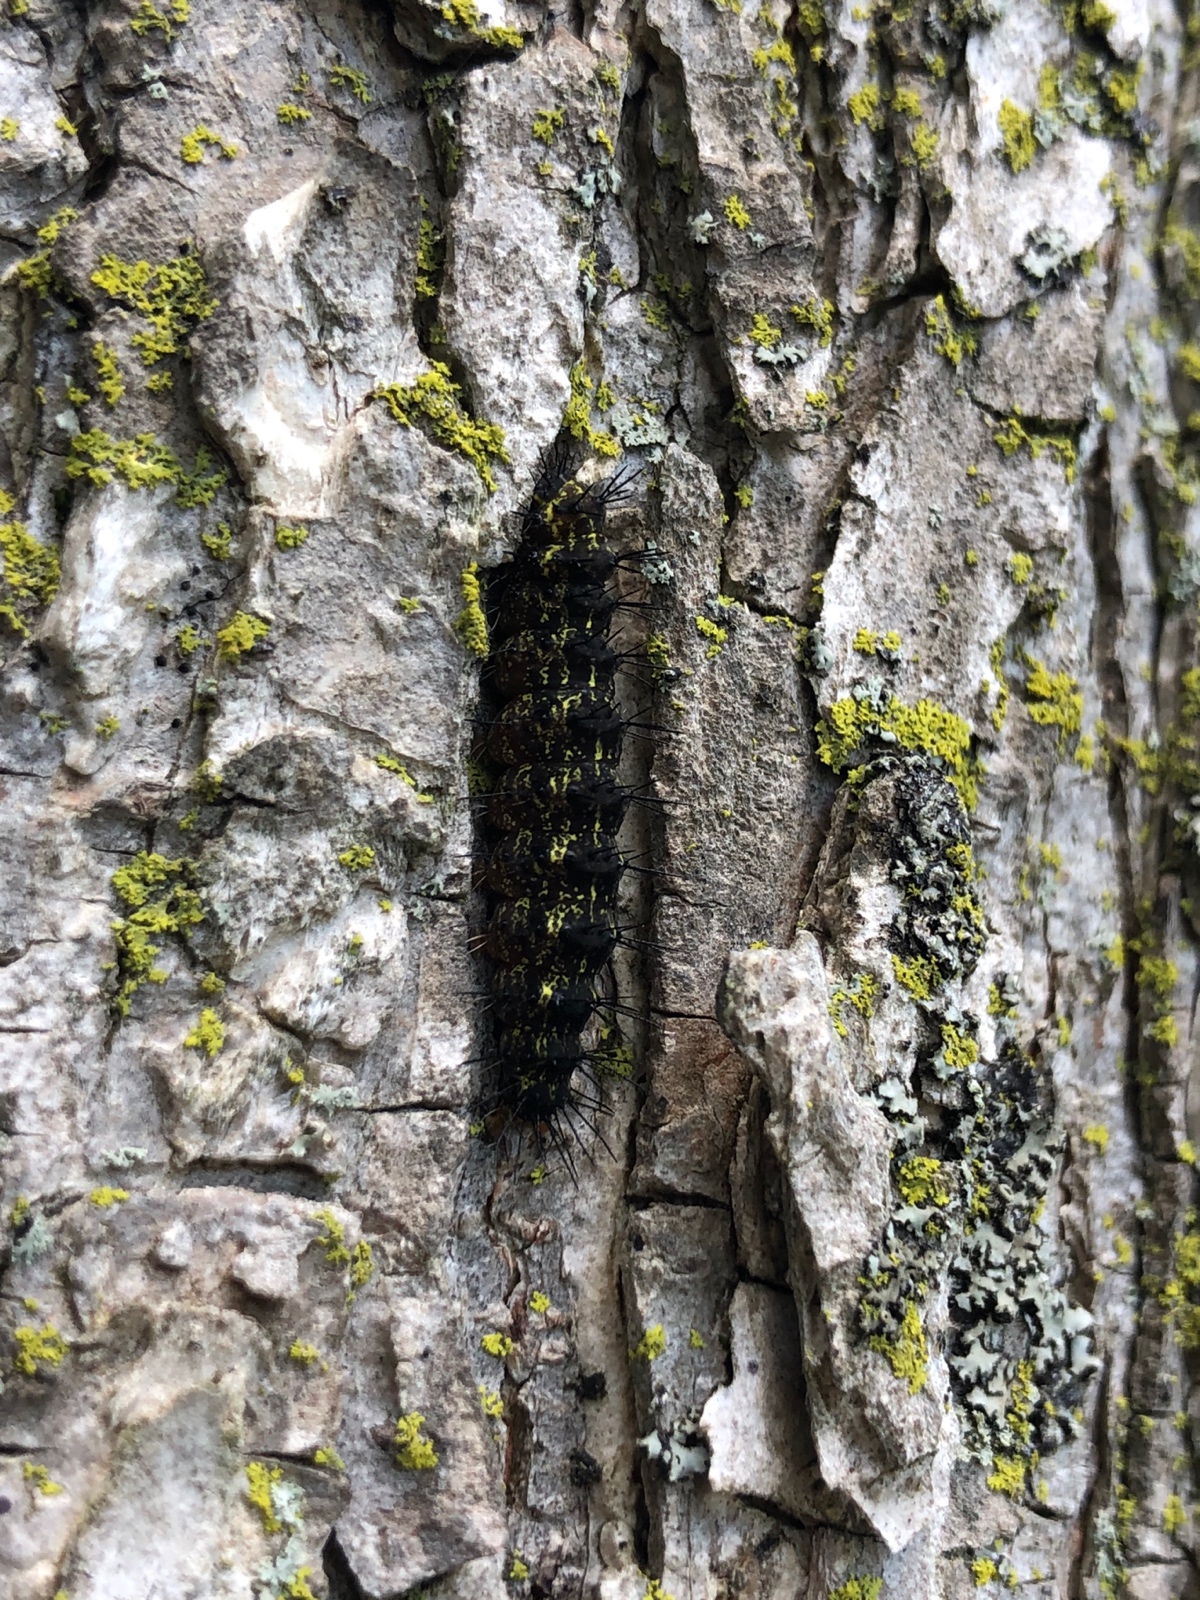 Caterpillar camouflage